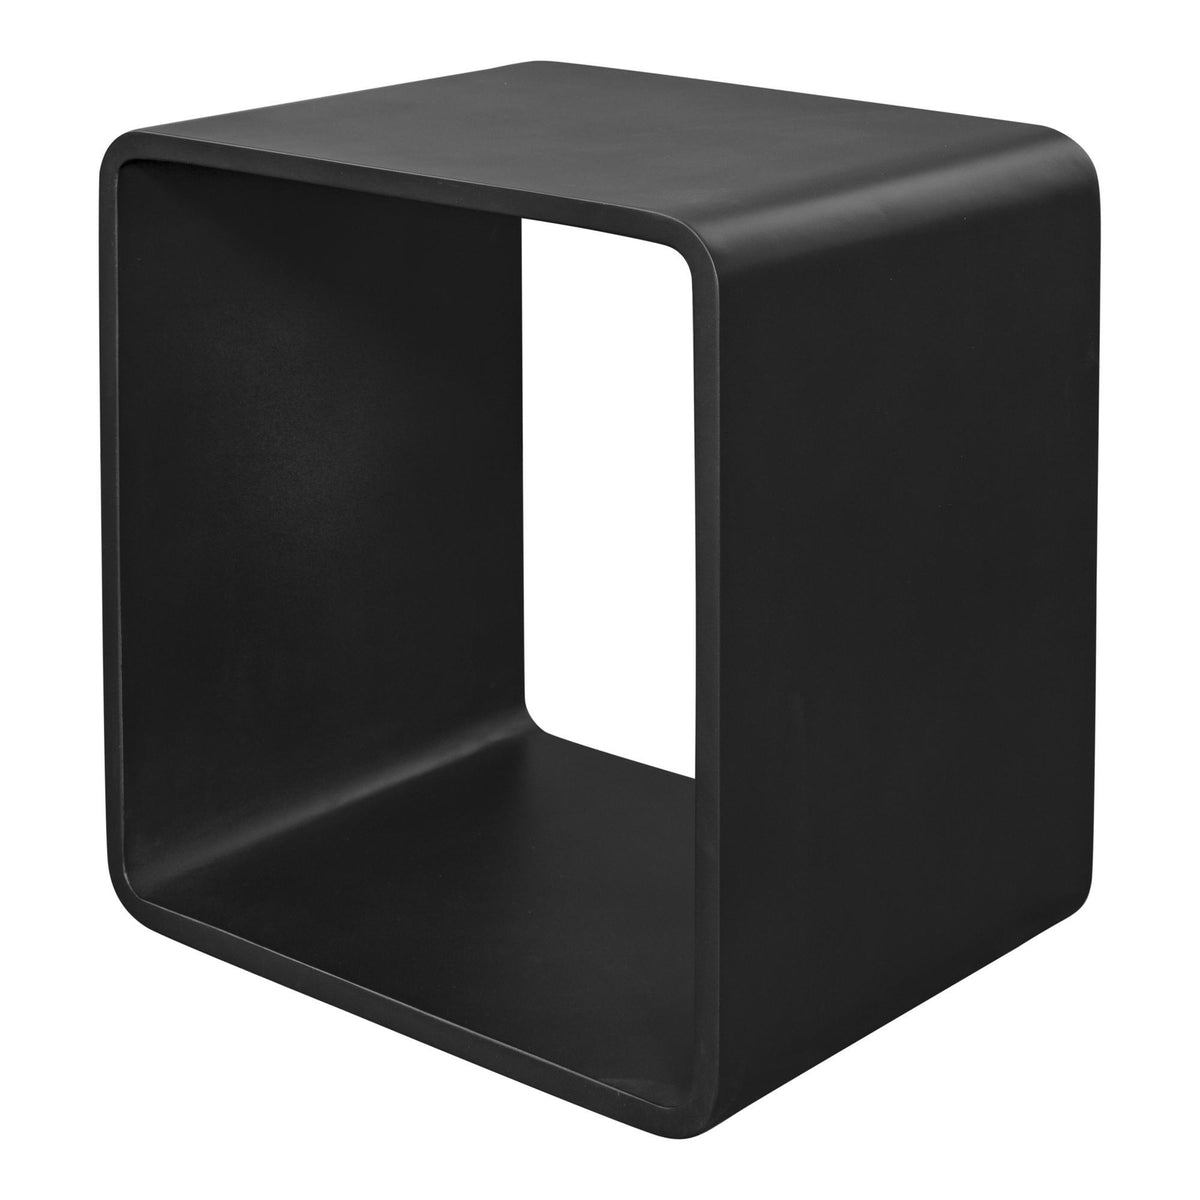 Moe's Home Collection Cali Accent Cube  Black - JK-1009-02